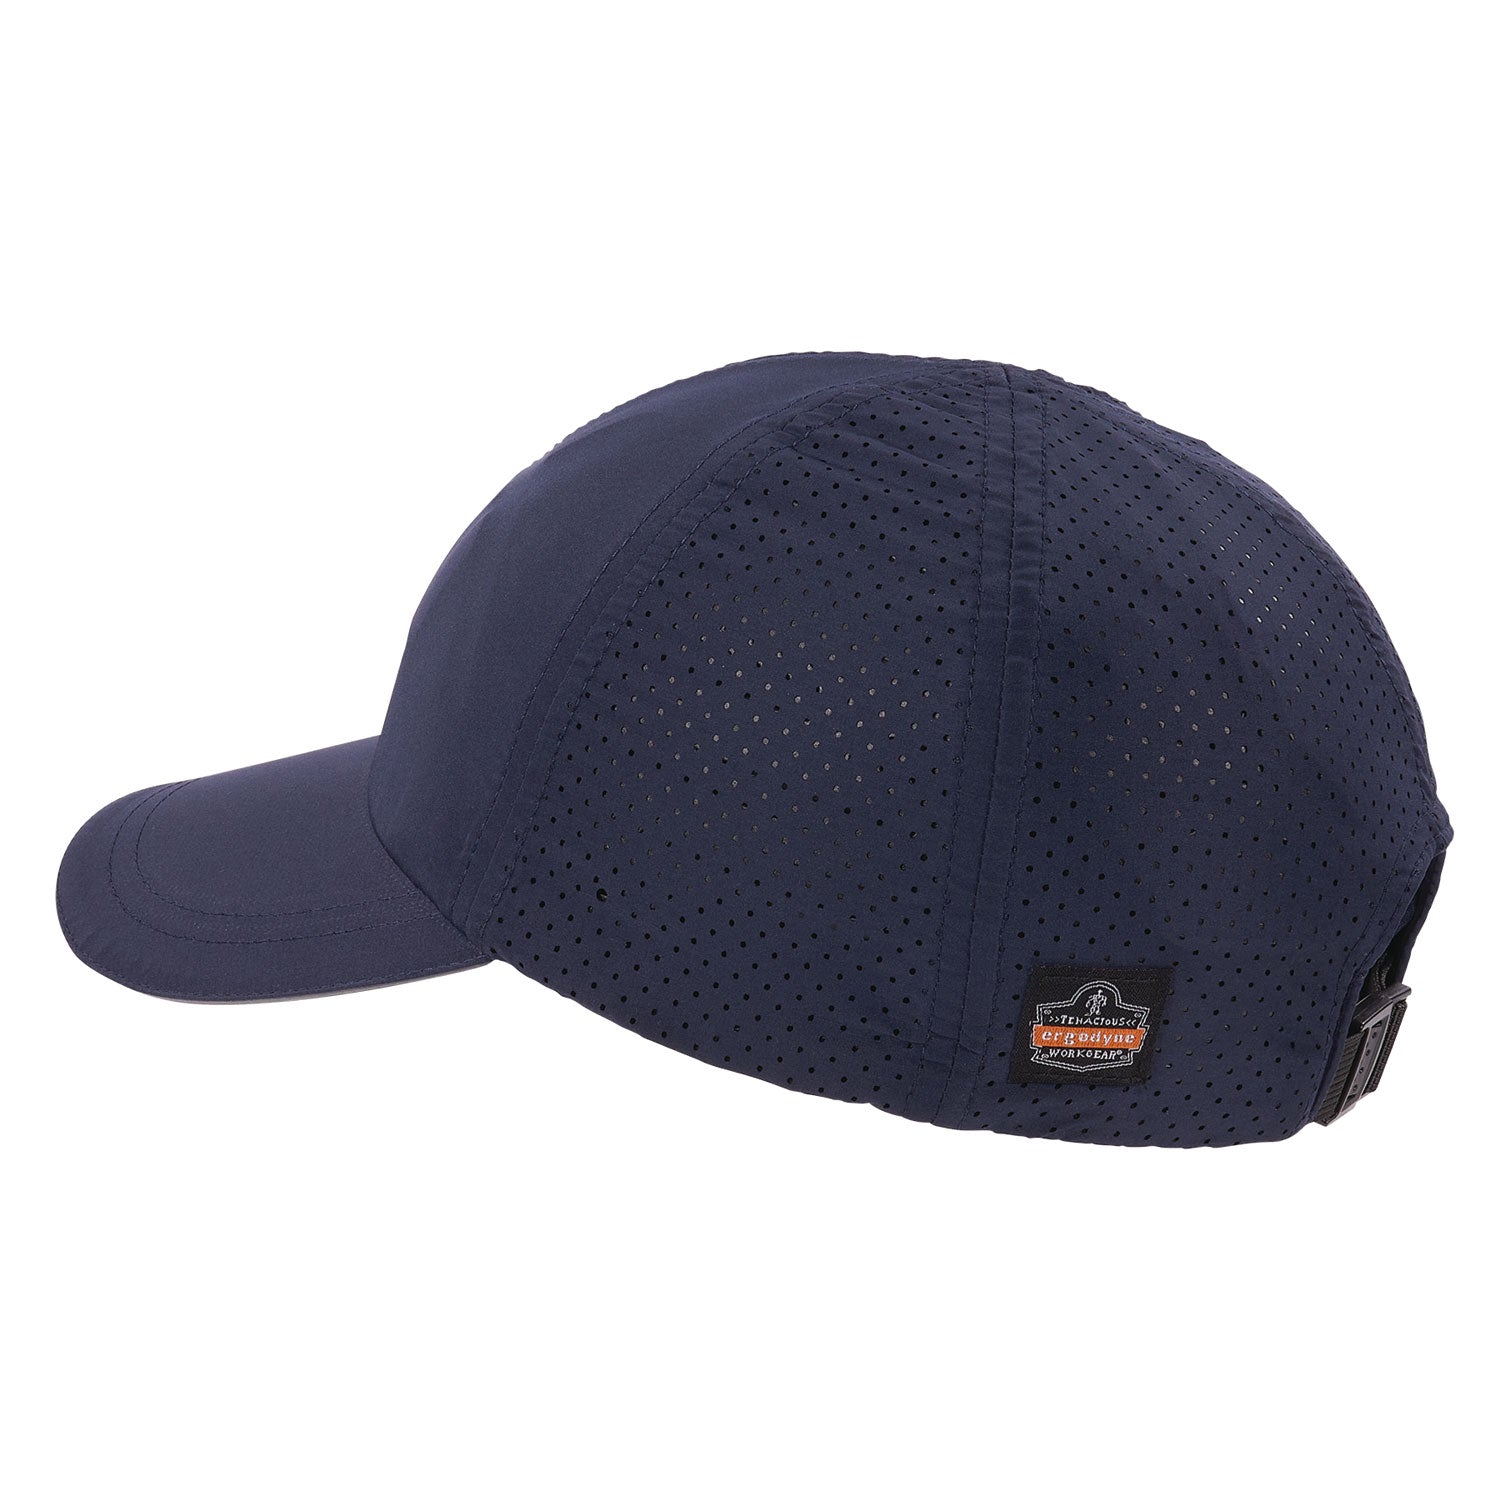 Ergodyne? Skullerz 8947 Lightweight Baseball Hat and Bump Cap Insert, X-Small/Small, Navy, Ships in 1-3 Business Days